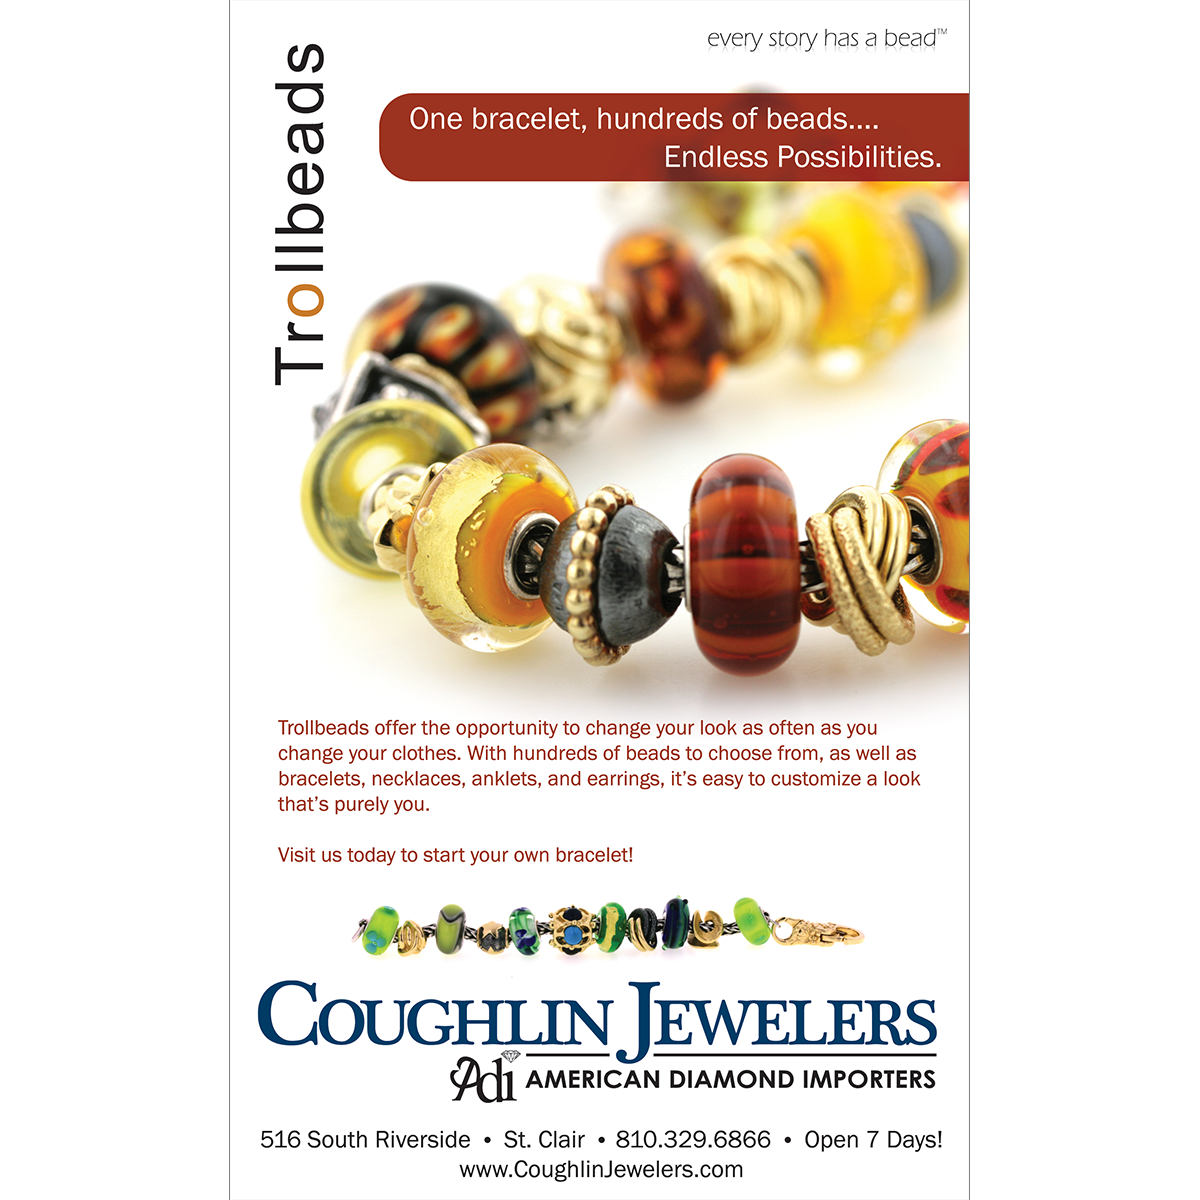 Coughlin Jewelers Trollbeads Ad